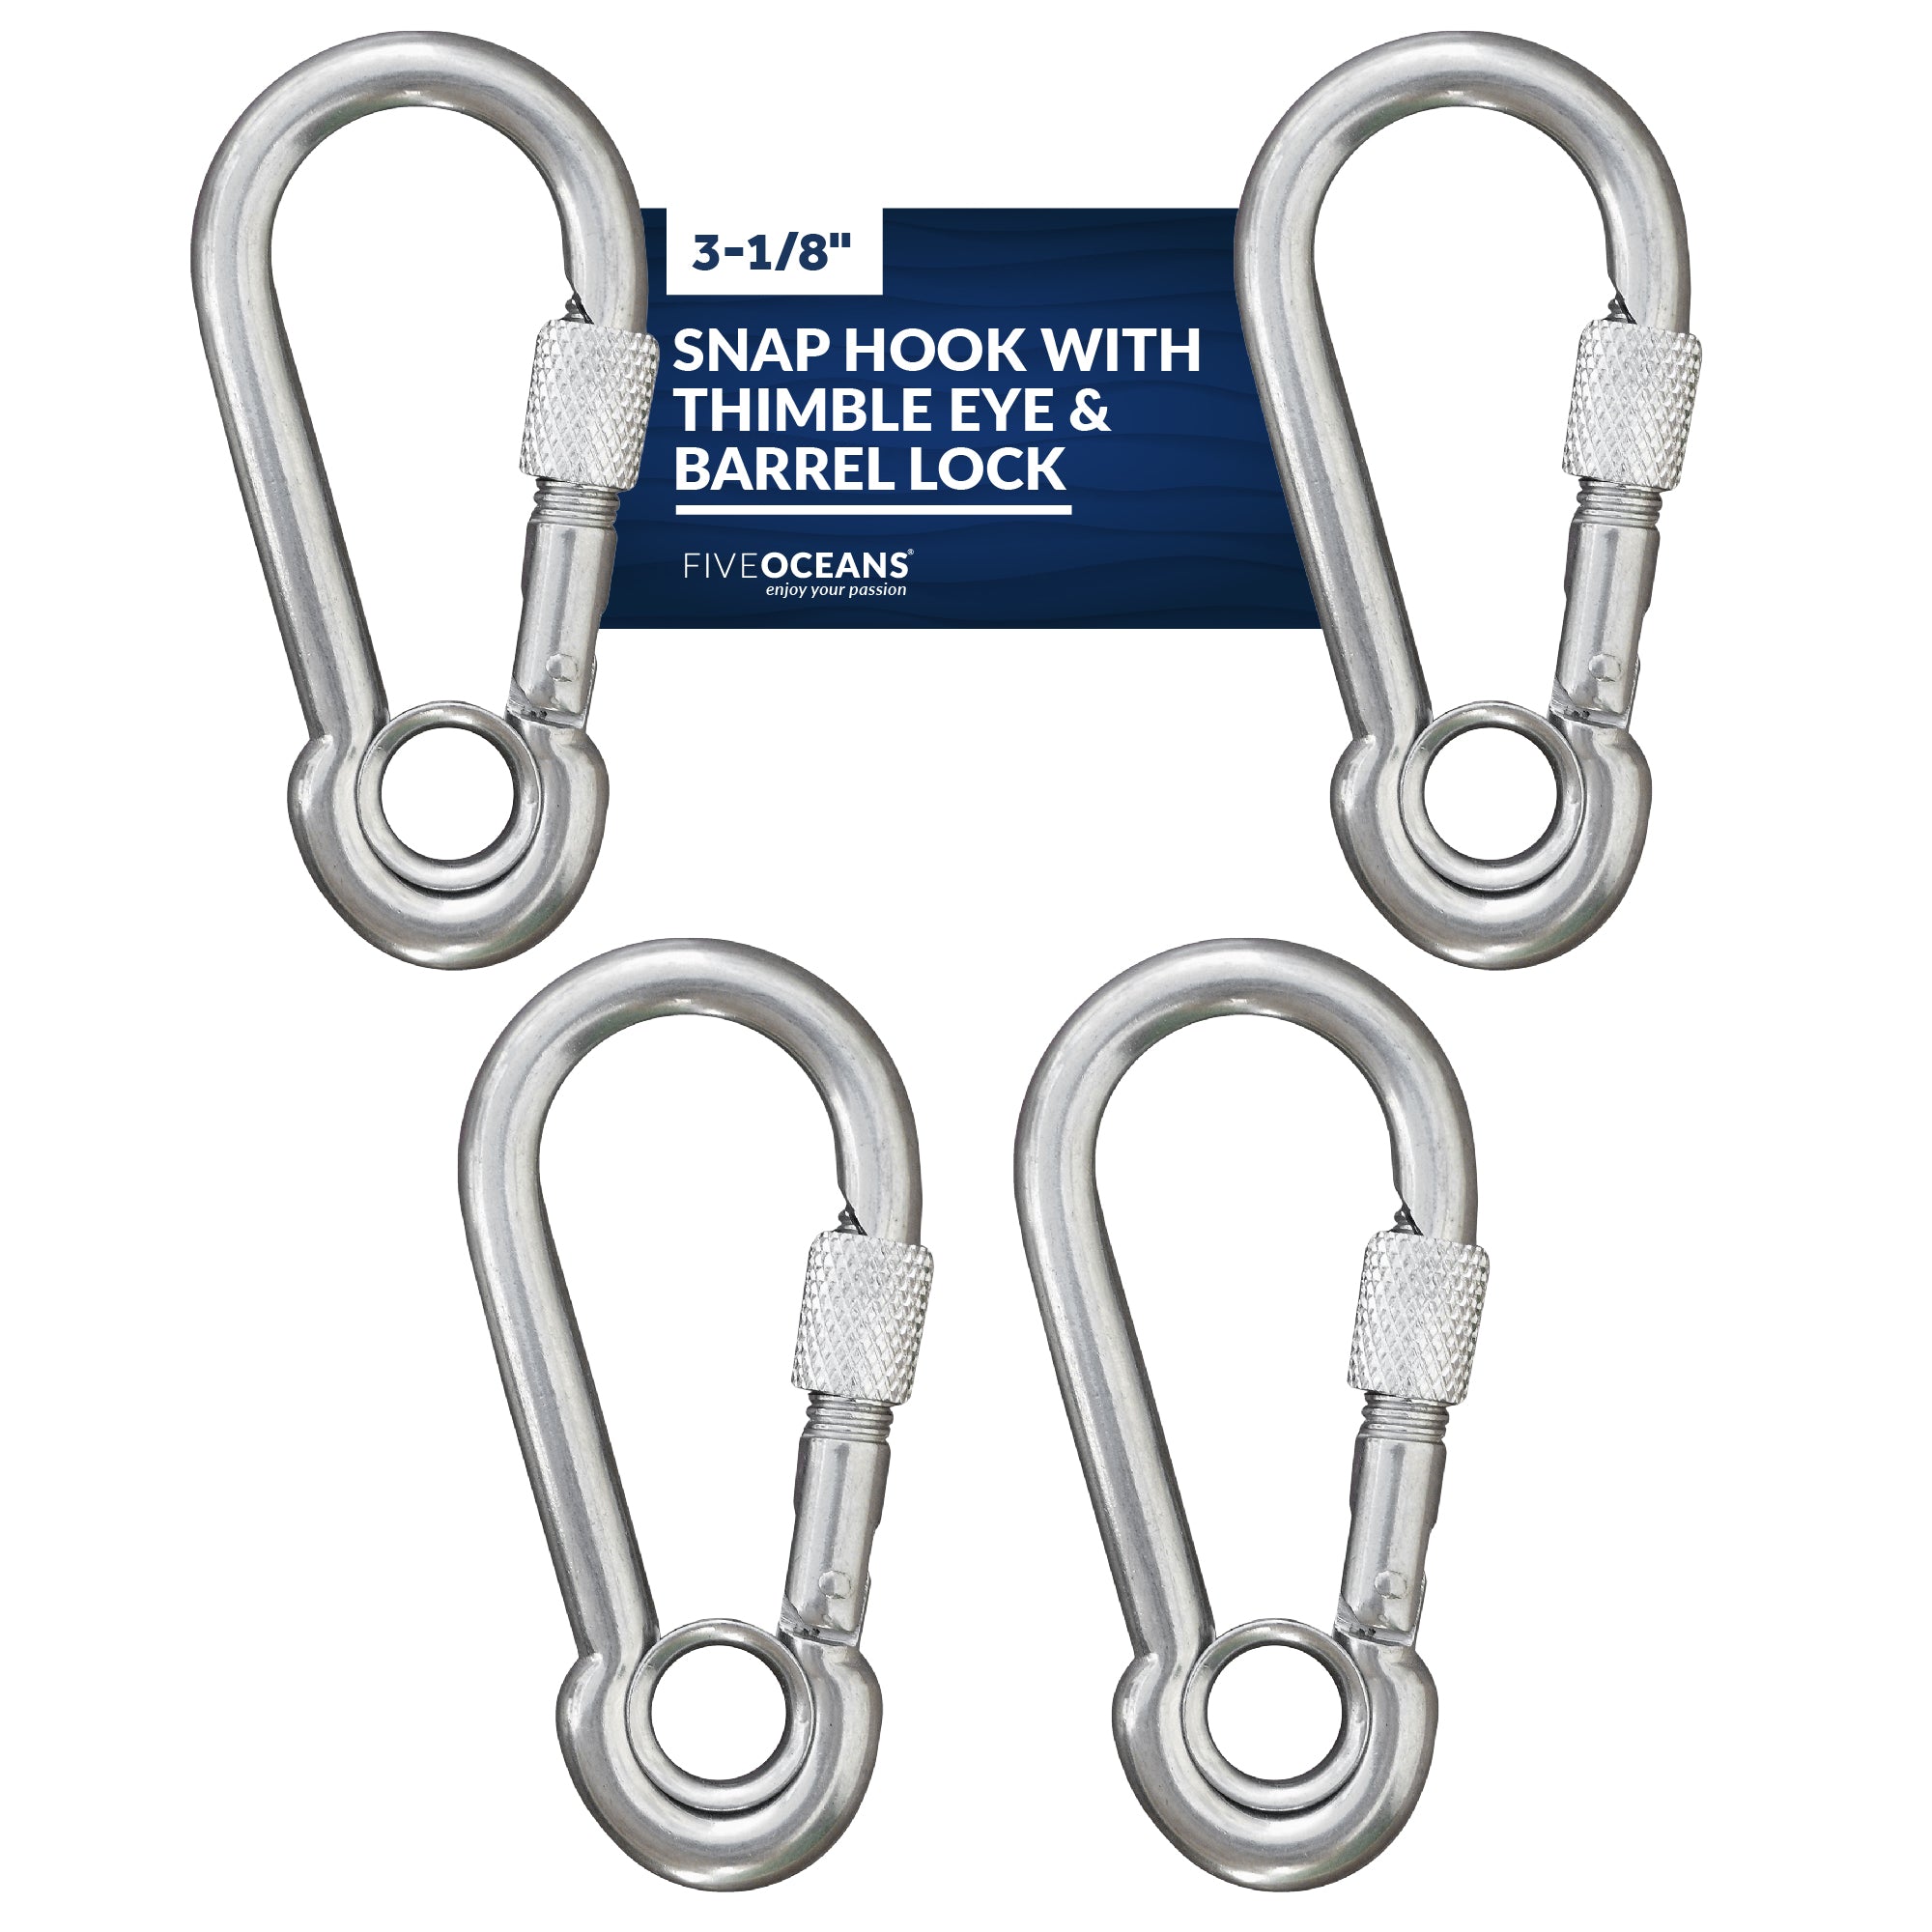 Snap Hook with Thimble Eye & Barrel Lock, 3-1/8" - FO455-M4